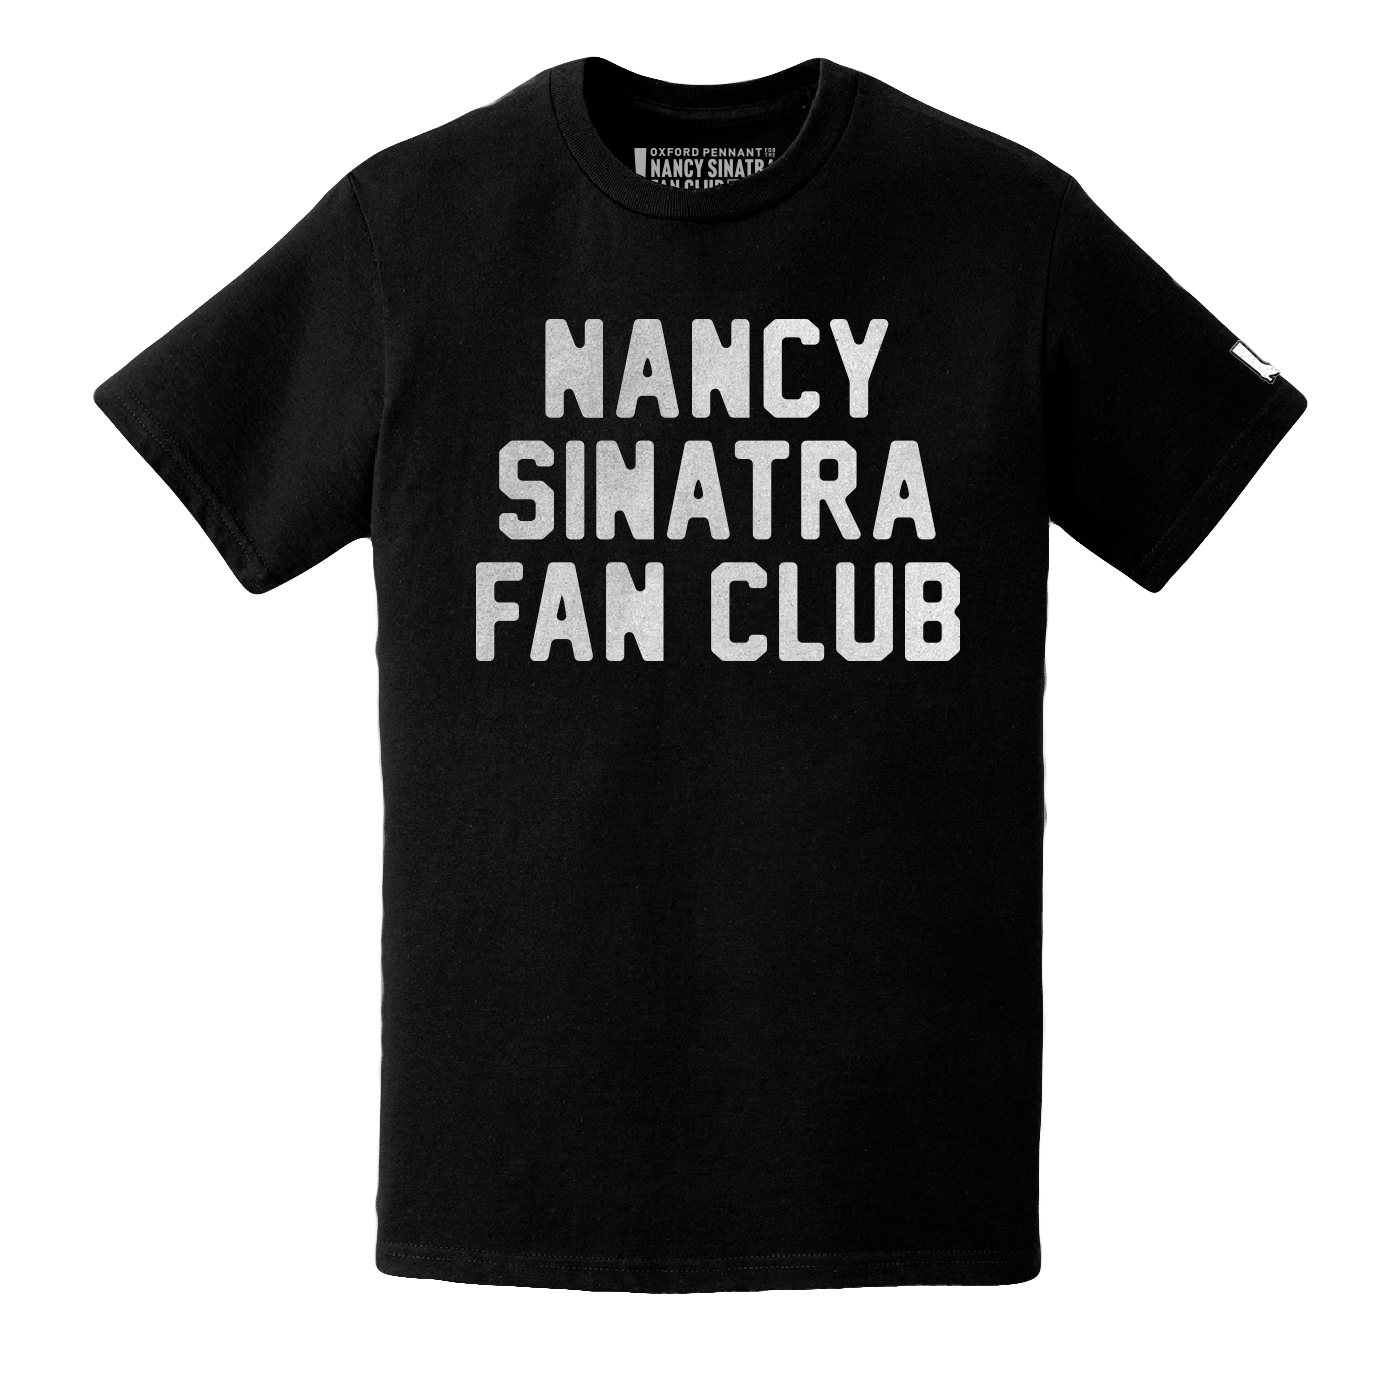 Nancy Sinatra Fan Club Collection T-Shirt